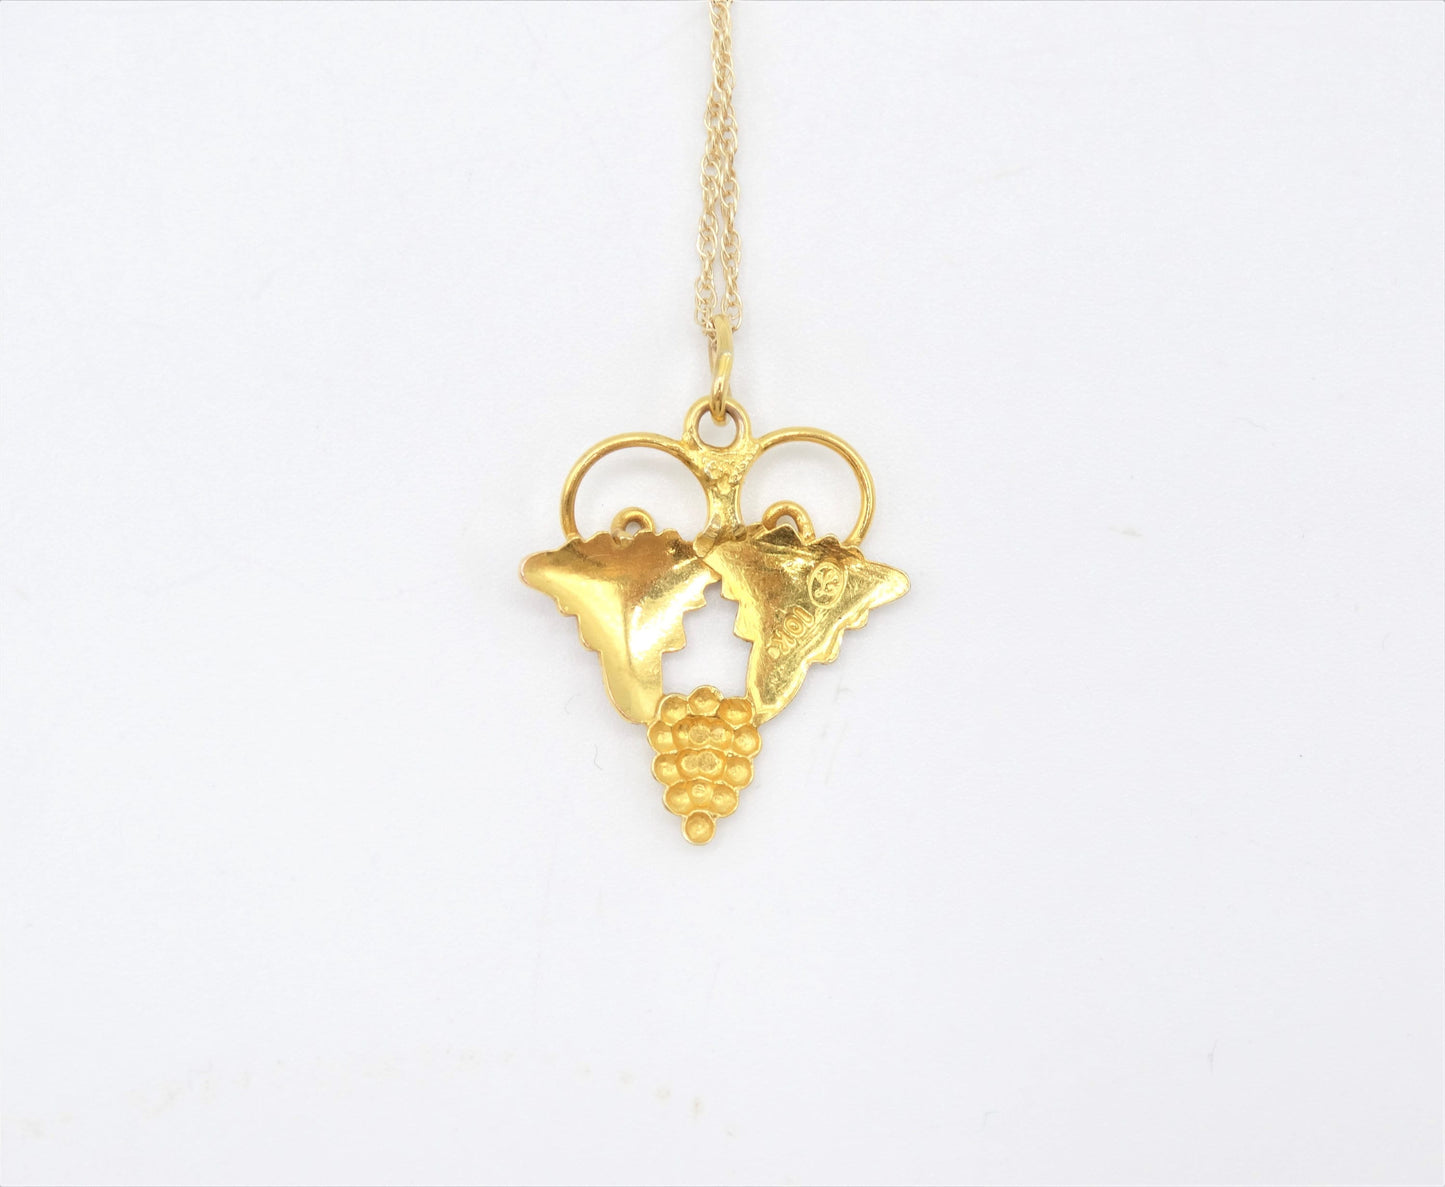 1.3g, Vintage 14K Gold Black Hills Gold Duo Tone Necklace, Boho Minimalist Pendant Necklace, Everyday Jewelry